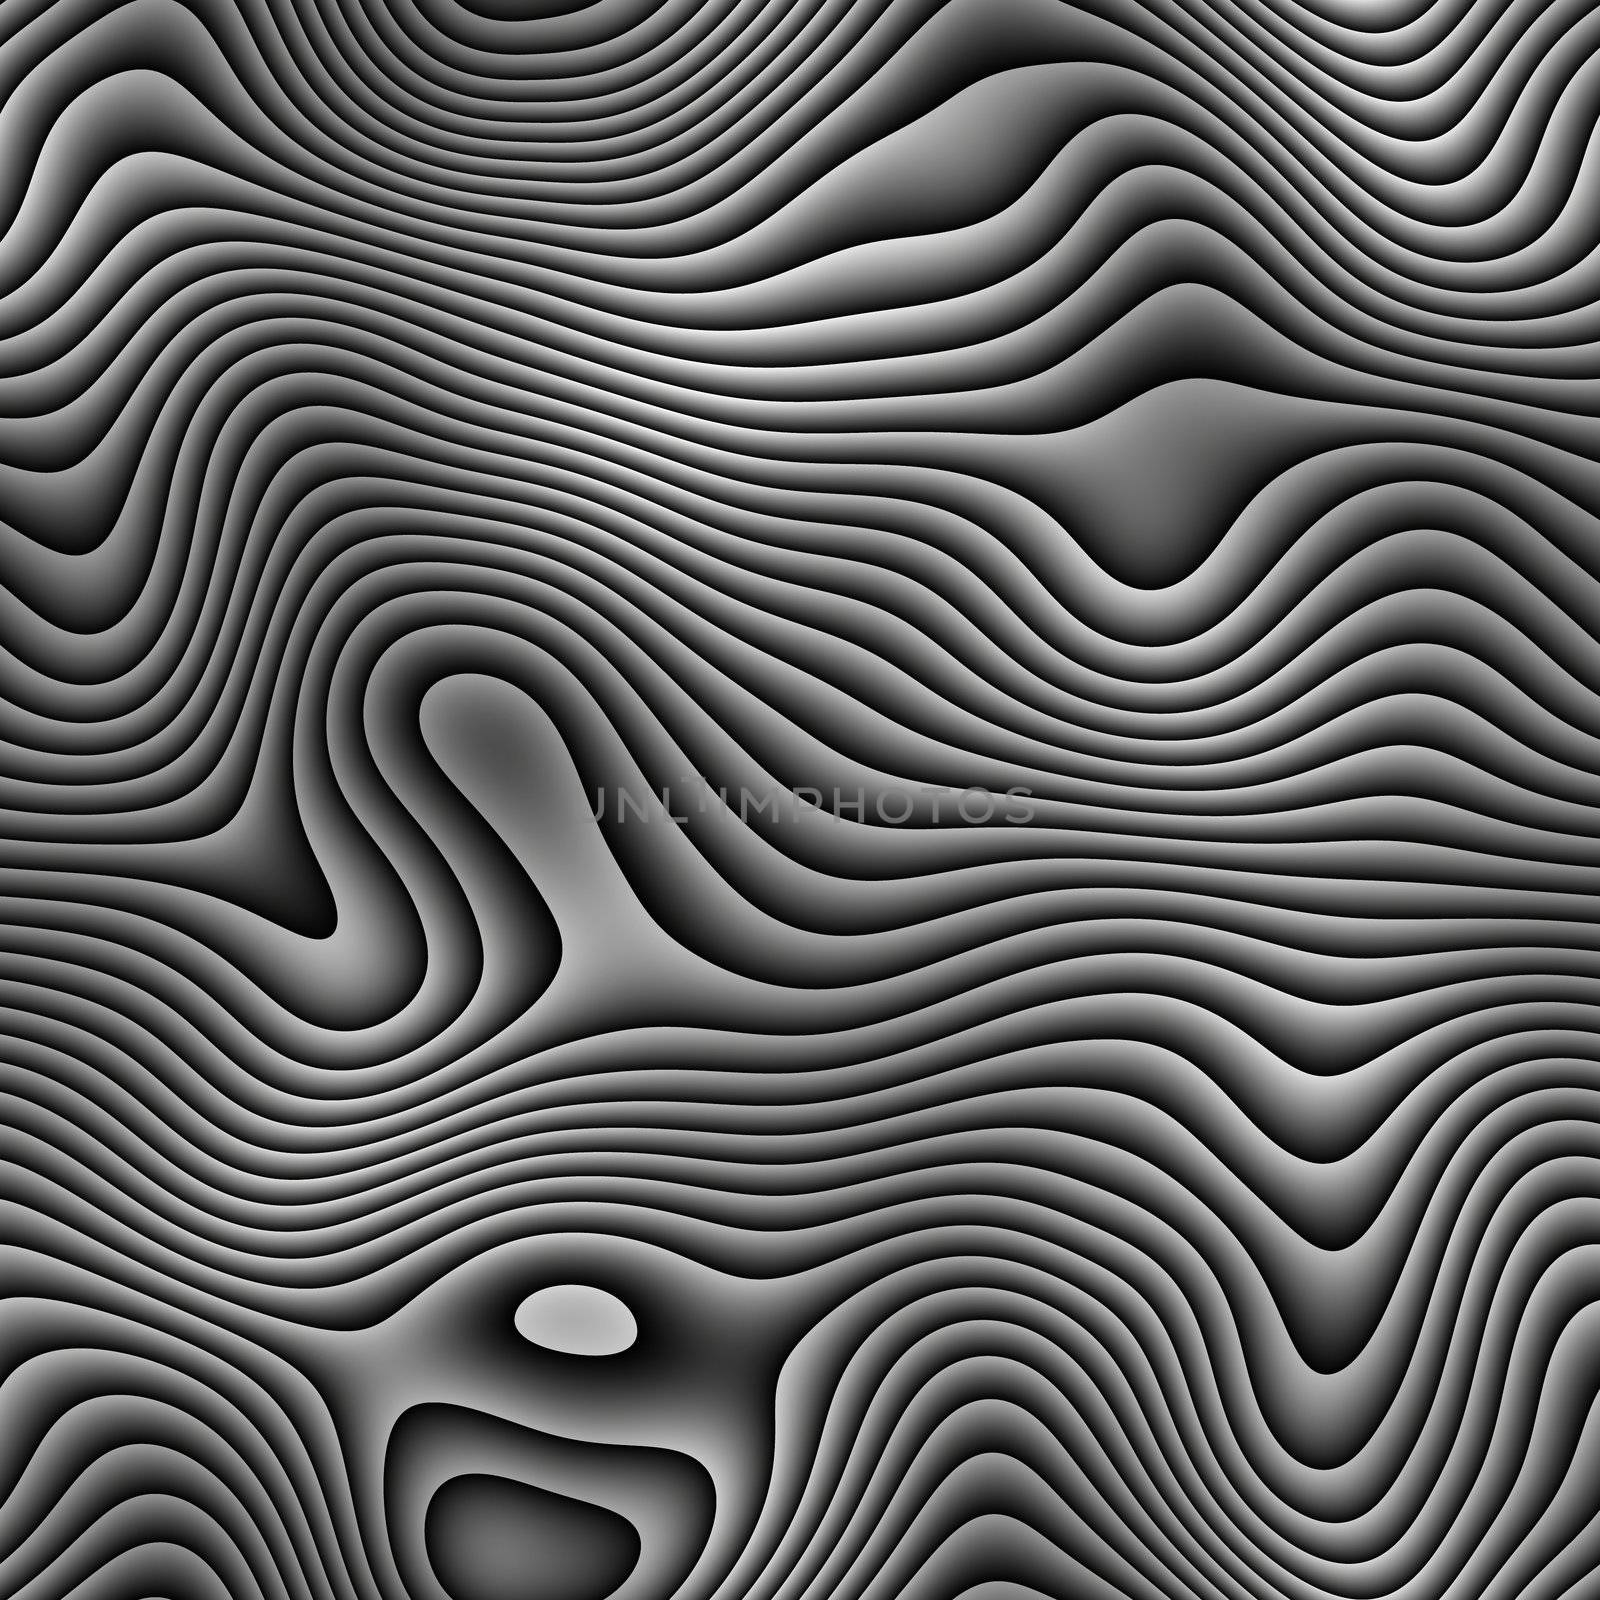 black and white retro zebra style pattern, tiles seamlessly